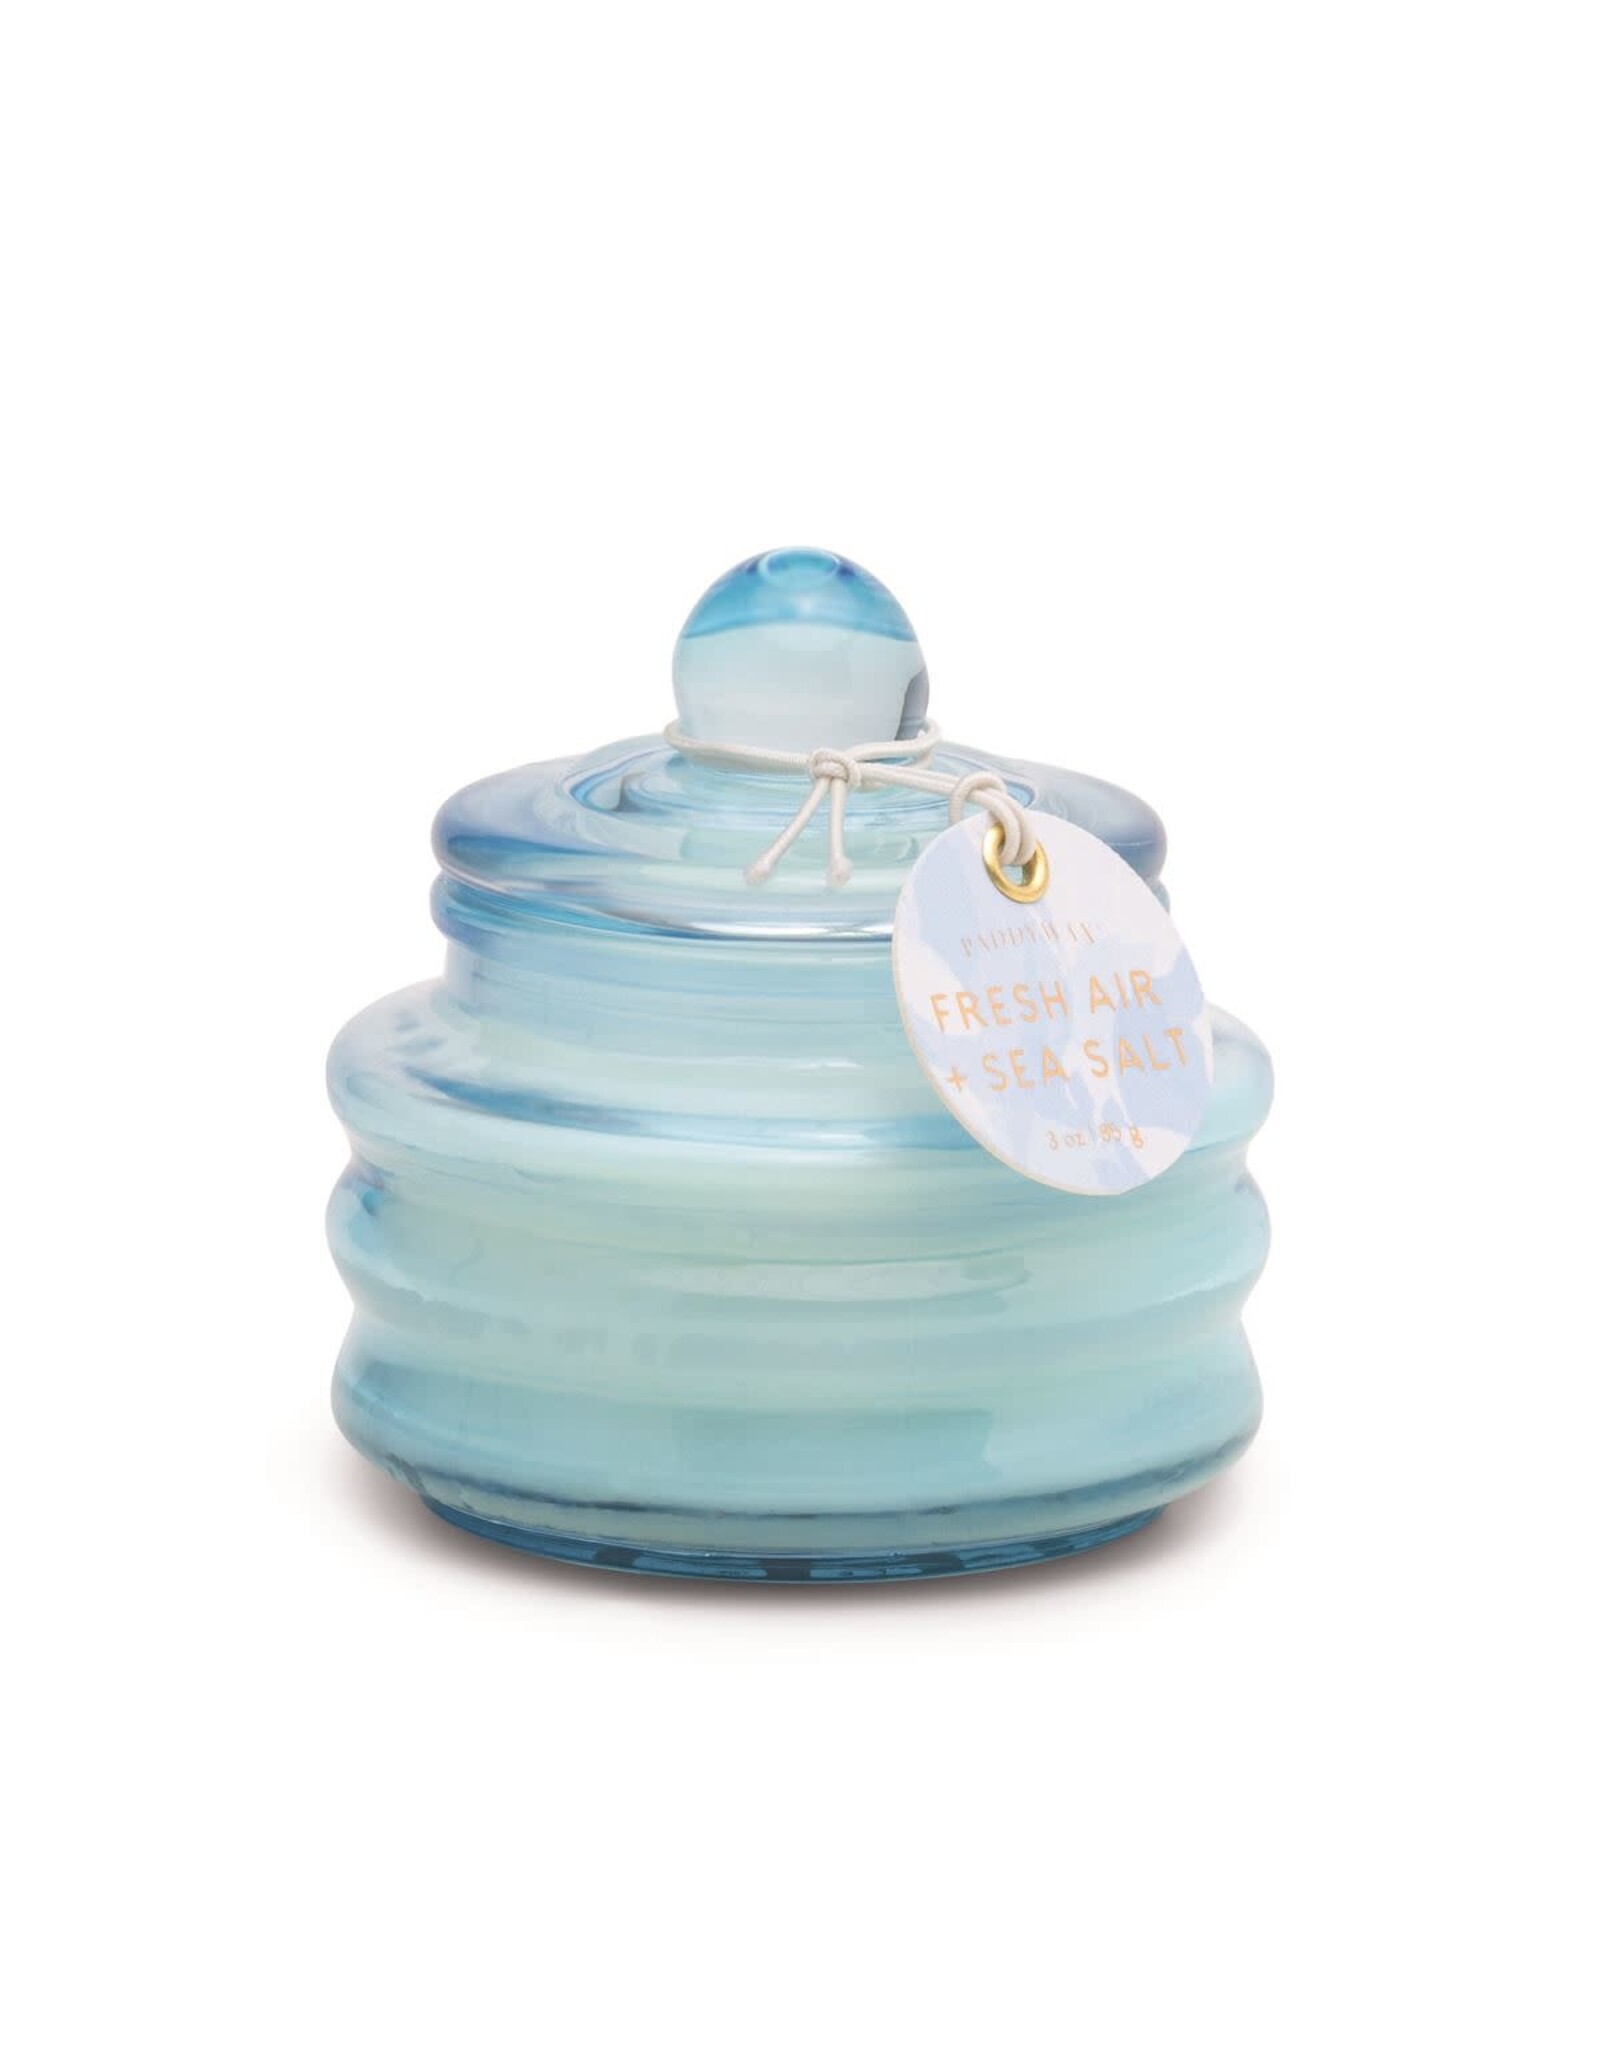 Paddywax Fresh Air + Sea Salt Beam 3oz Sky-Blue Glass Candle